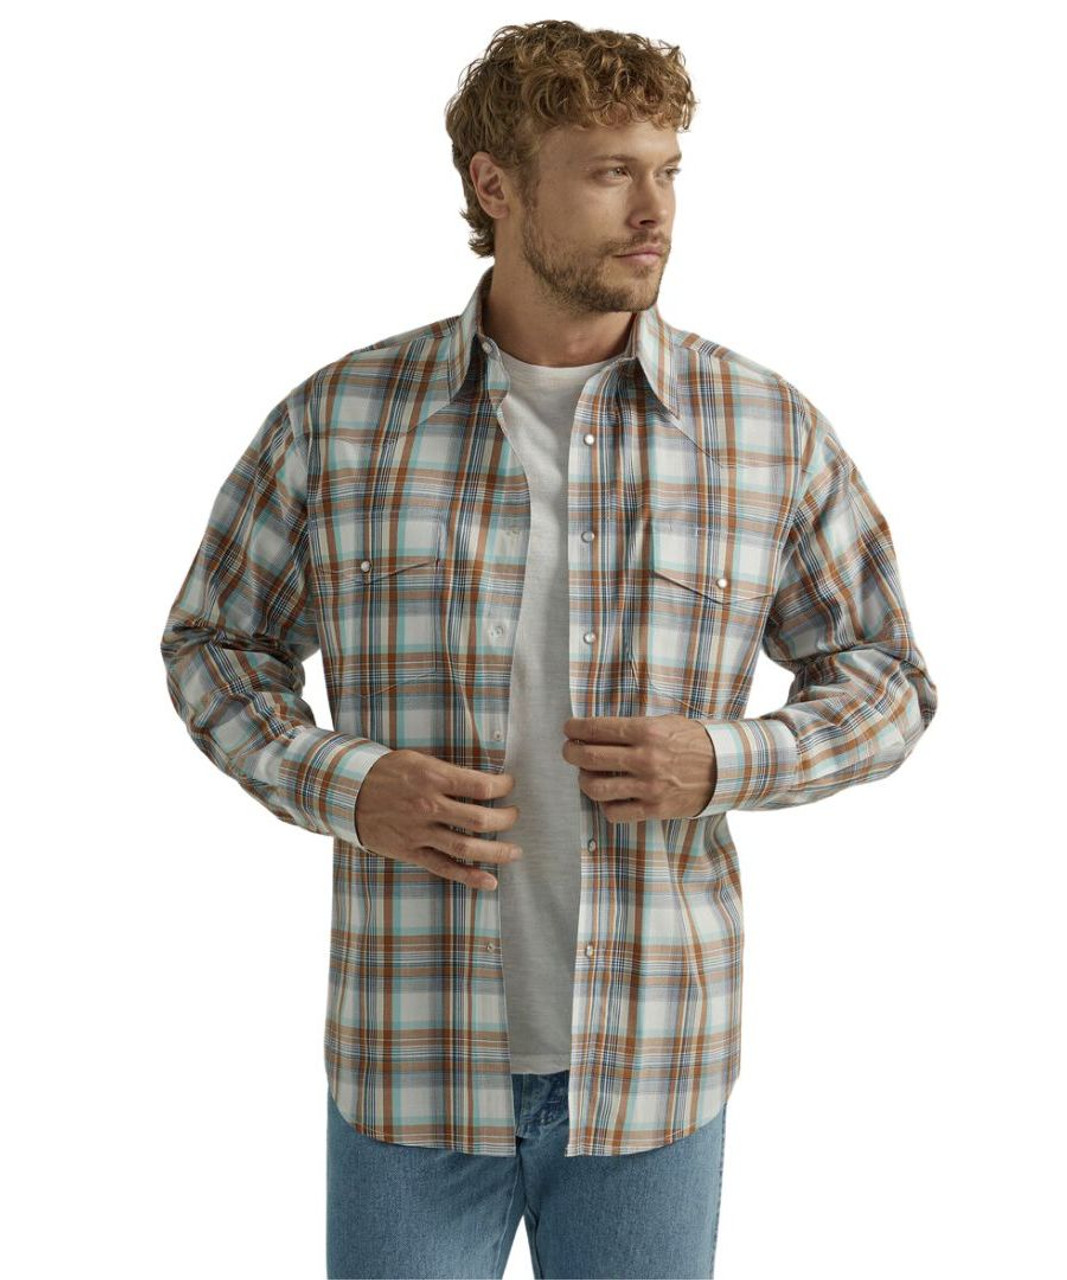 Men's Wrangler Red/Tan Pearl Snap Long Sleeve Shirt